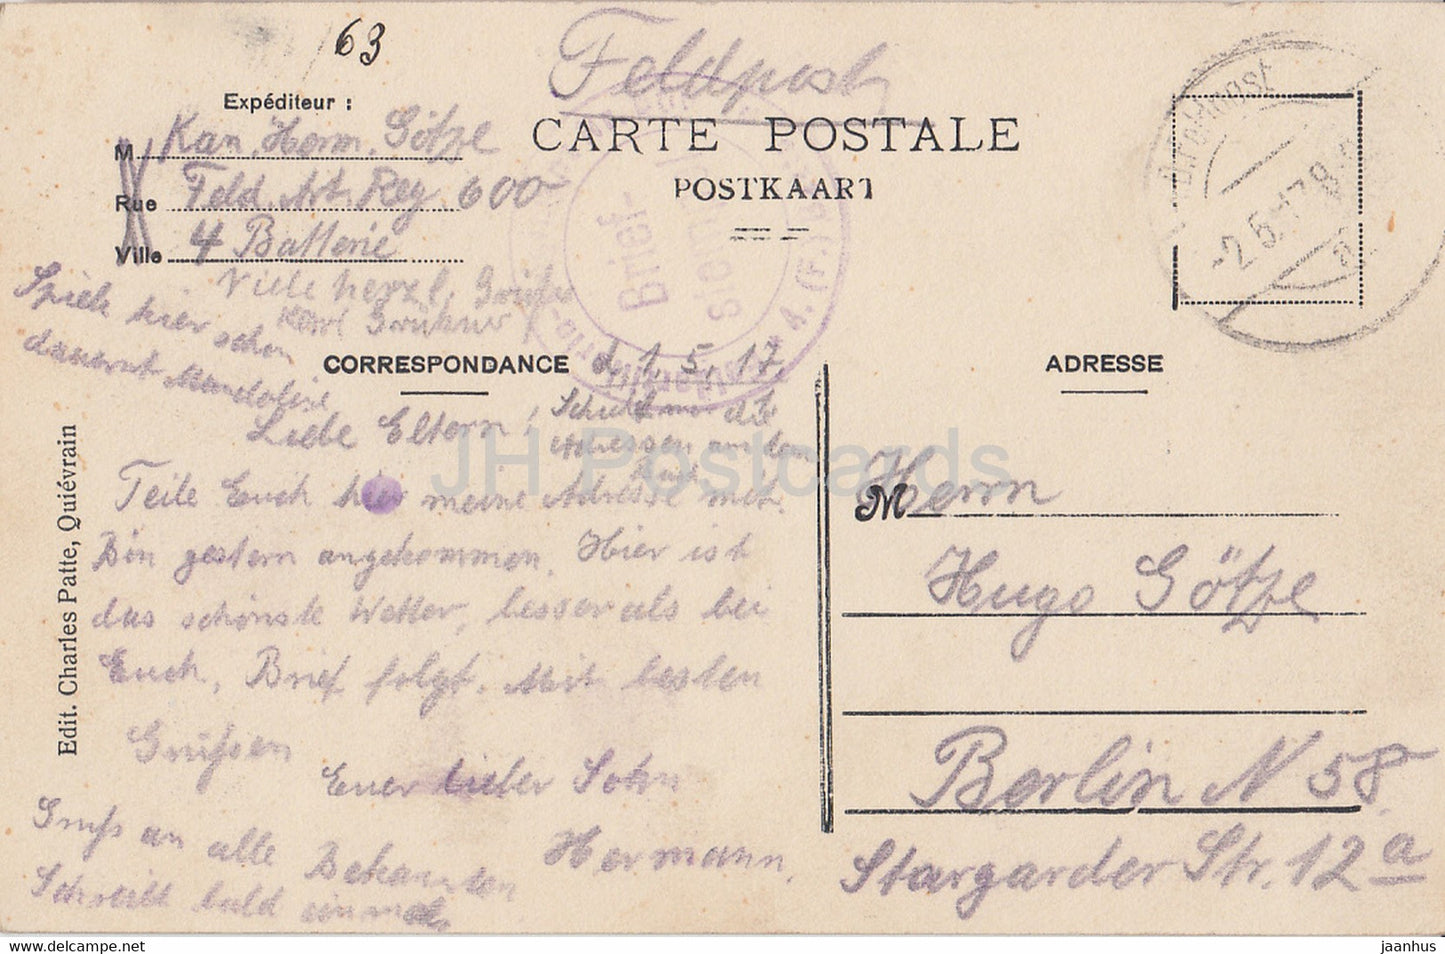 Montignies sur Roc - Le bas des Rocs - Feldpost - old postcard - 1917 - Belgium - used